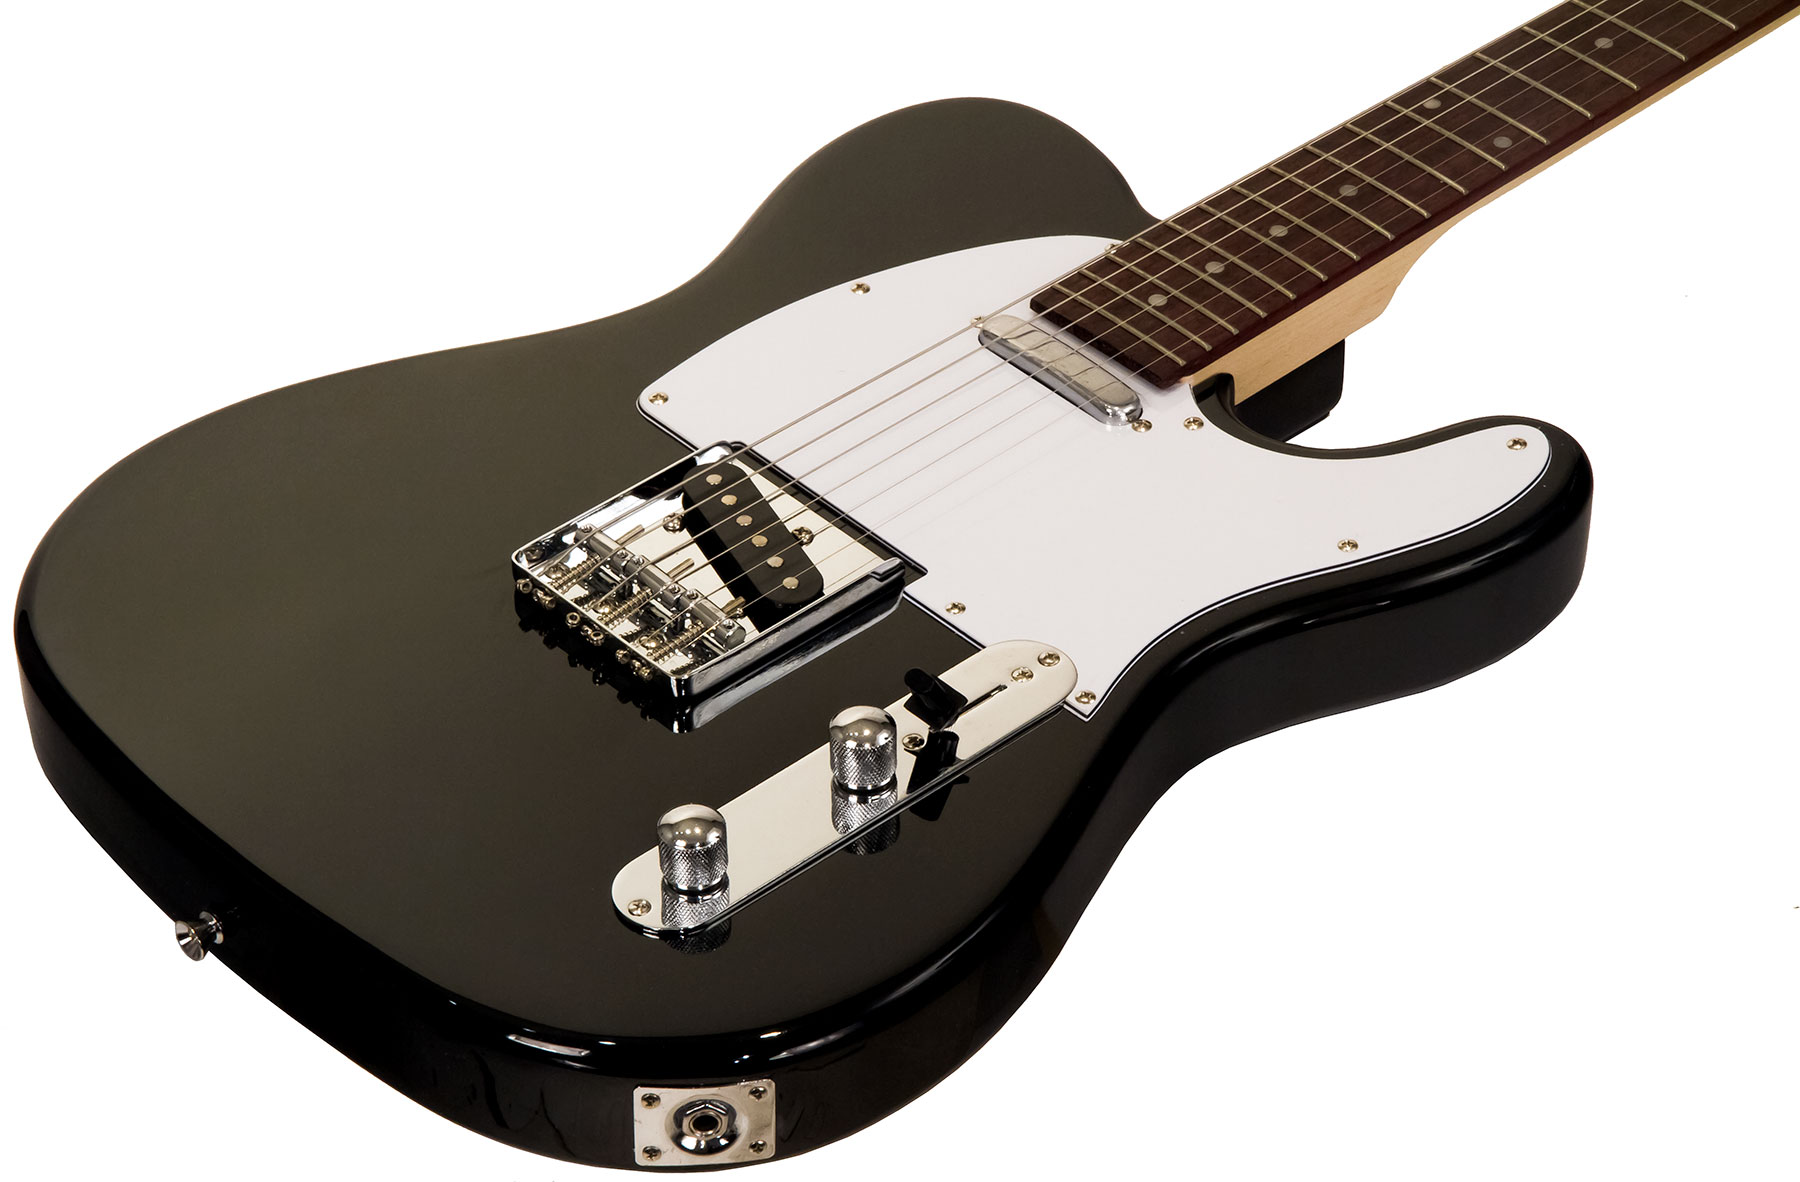 Eastone Tl70 Ss Ht Pur - Black - Tel shape electric guitar - Variation 1